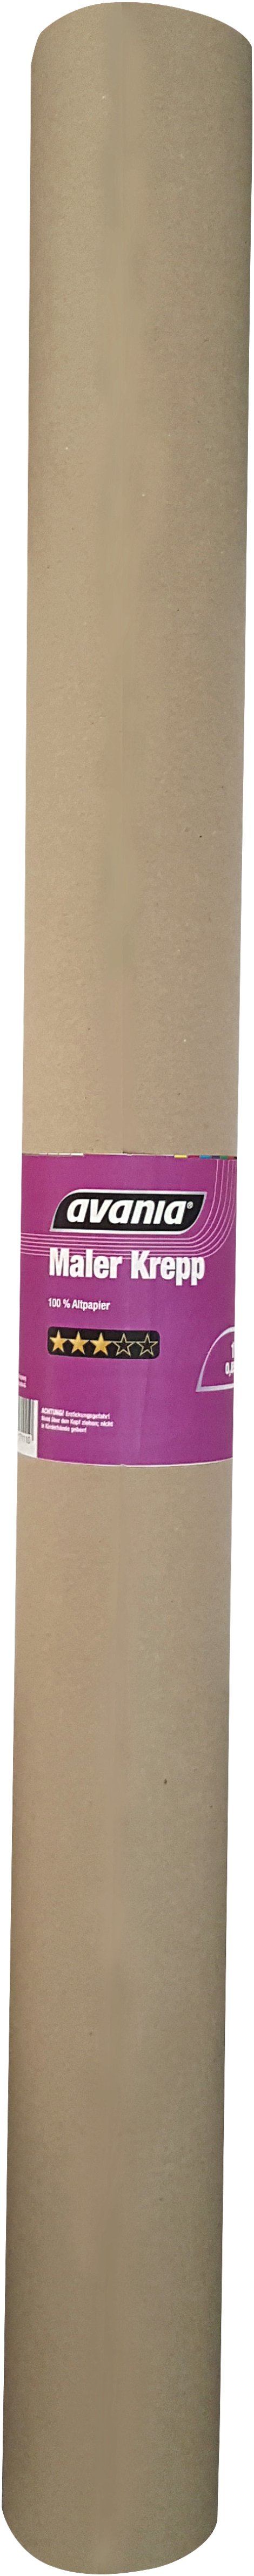 AVANIA Malerkrepp 0,85x20 m